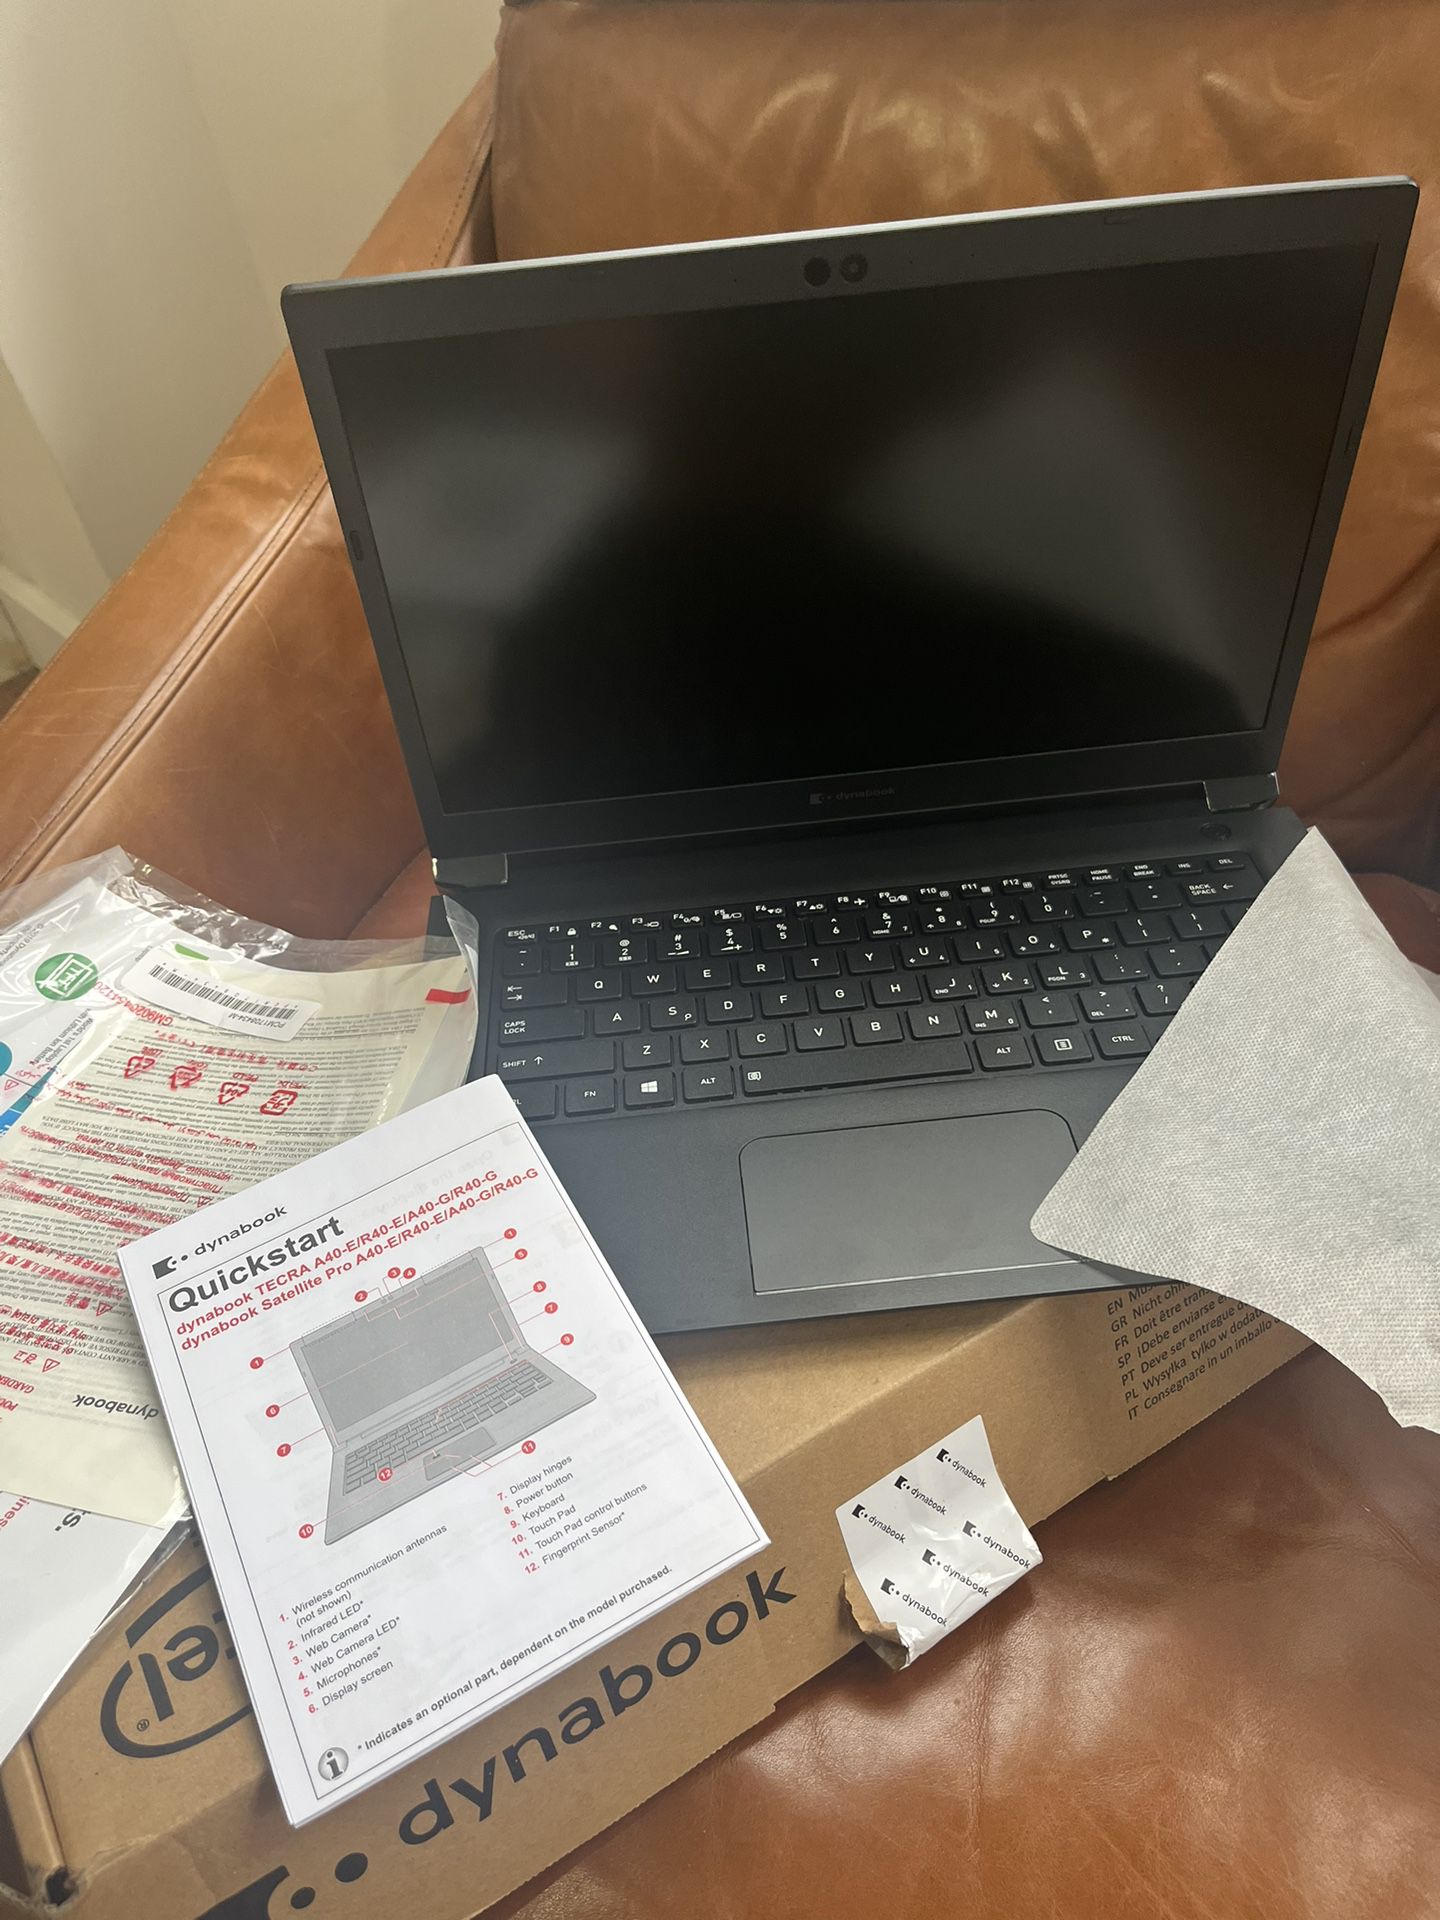 Toshiba Laptop In Box 15”